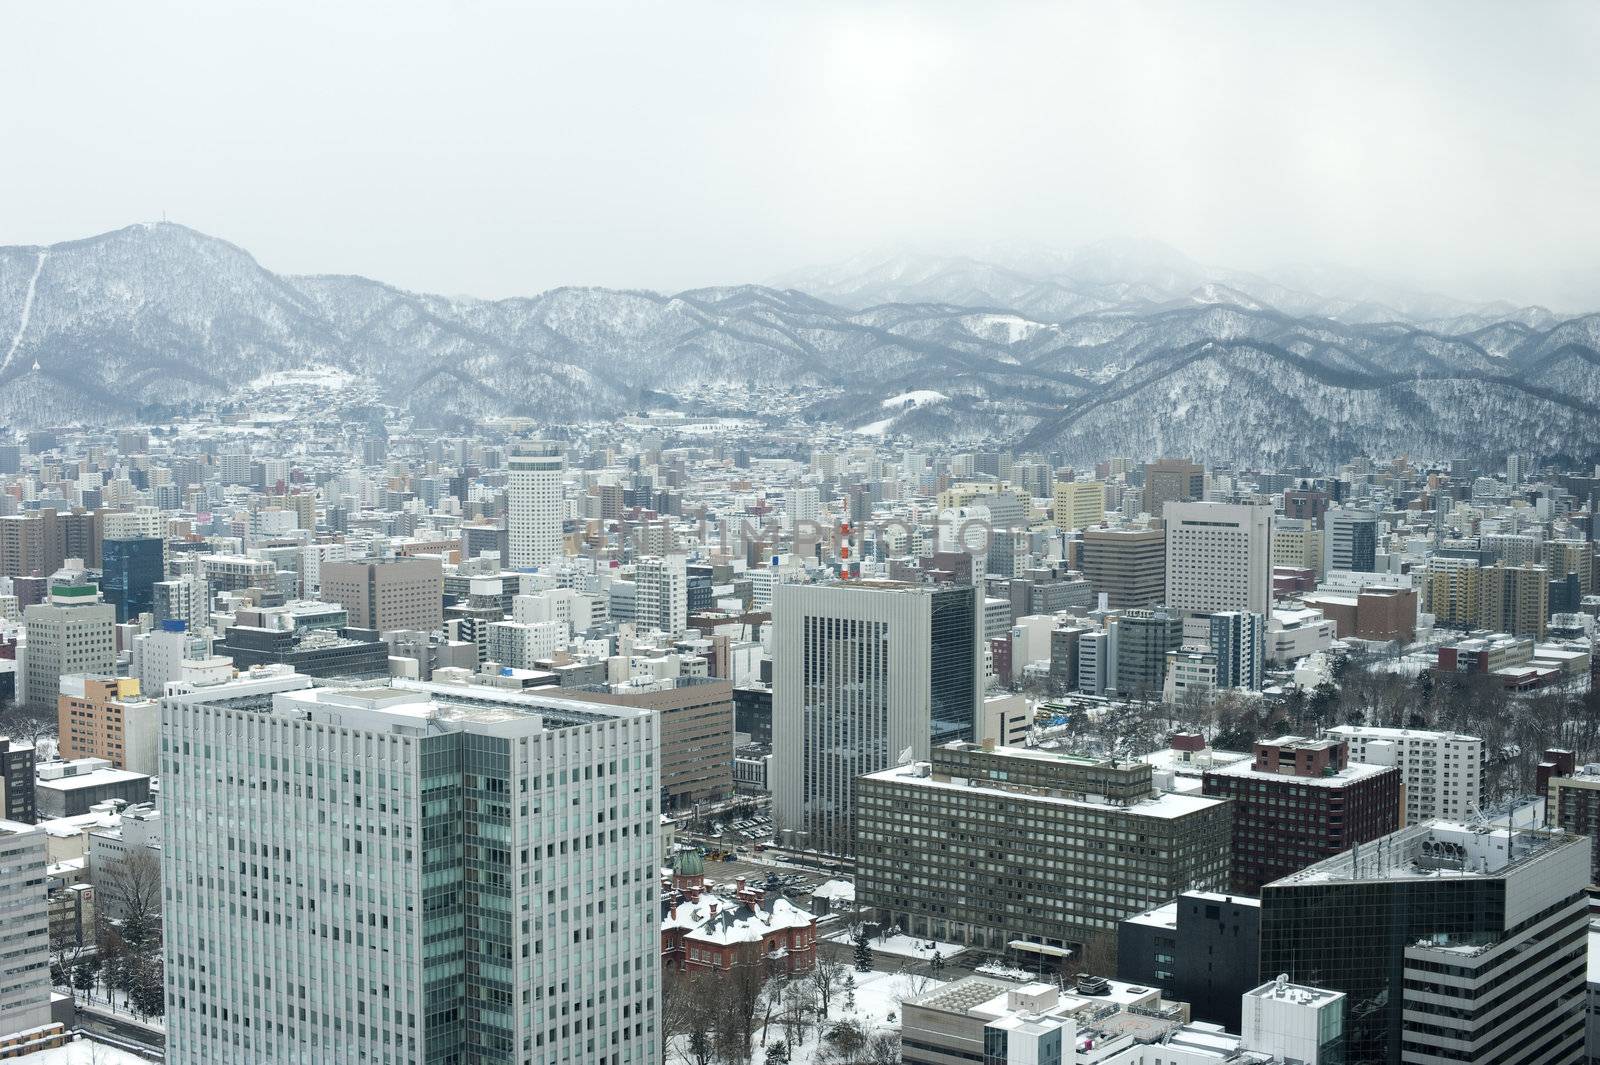 The city of Sapporo as viewed in winter, Hokkaido, Japan